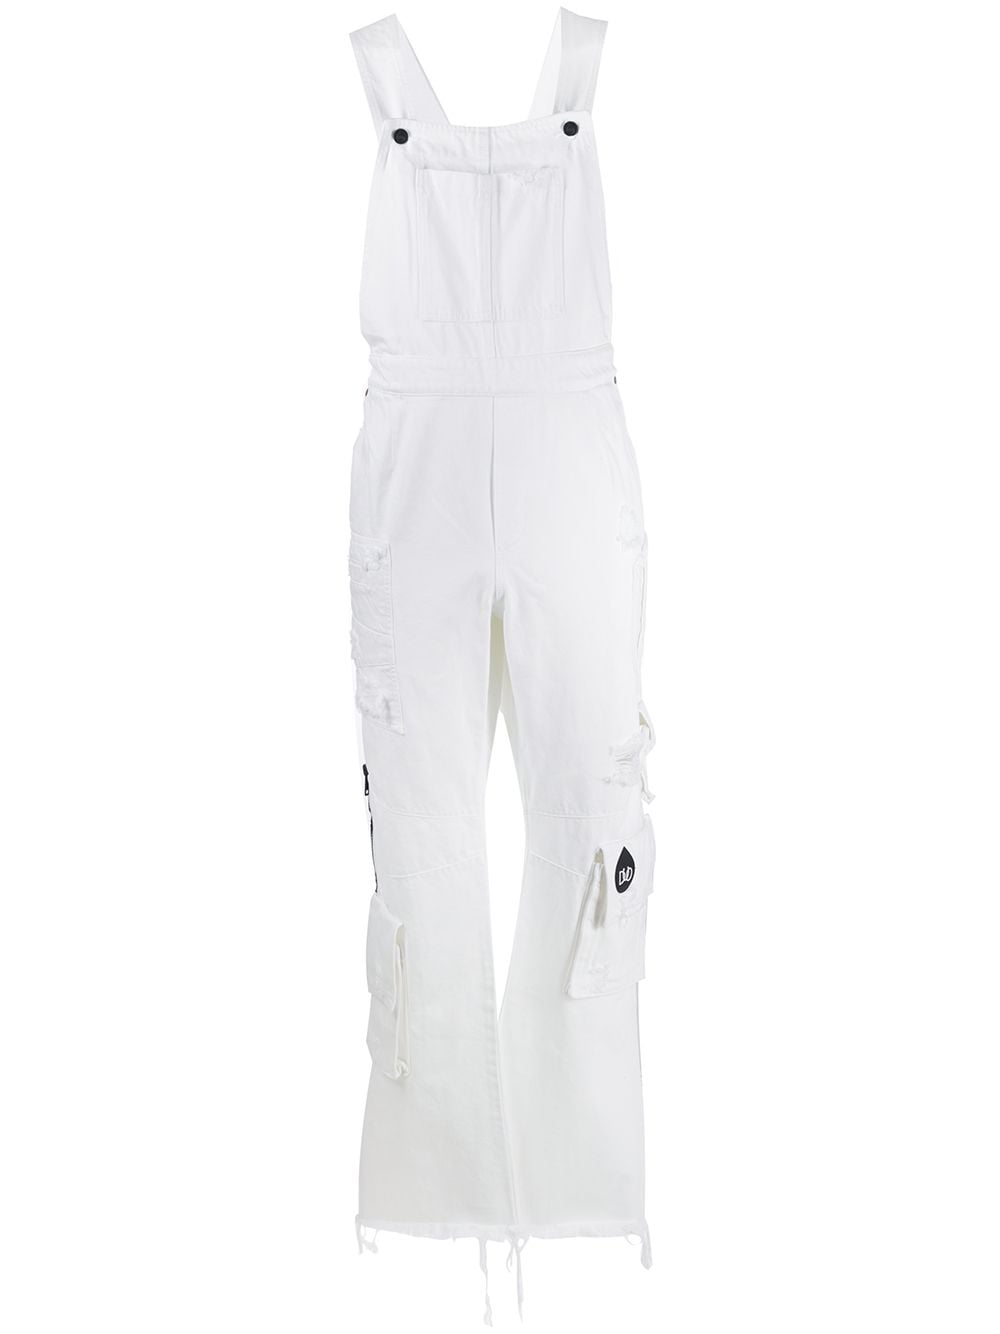 DUOltd multi-pocket denim overalls - White von DUOltd